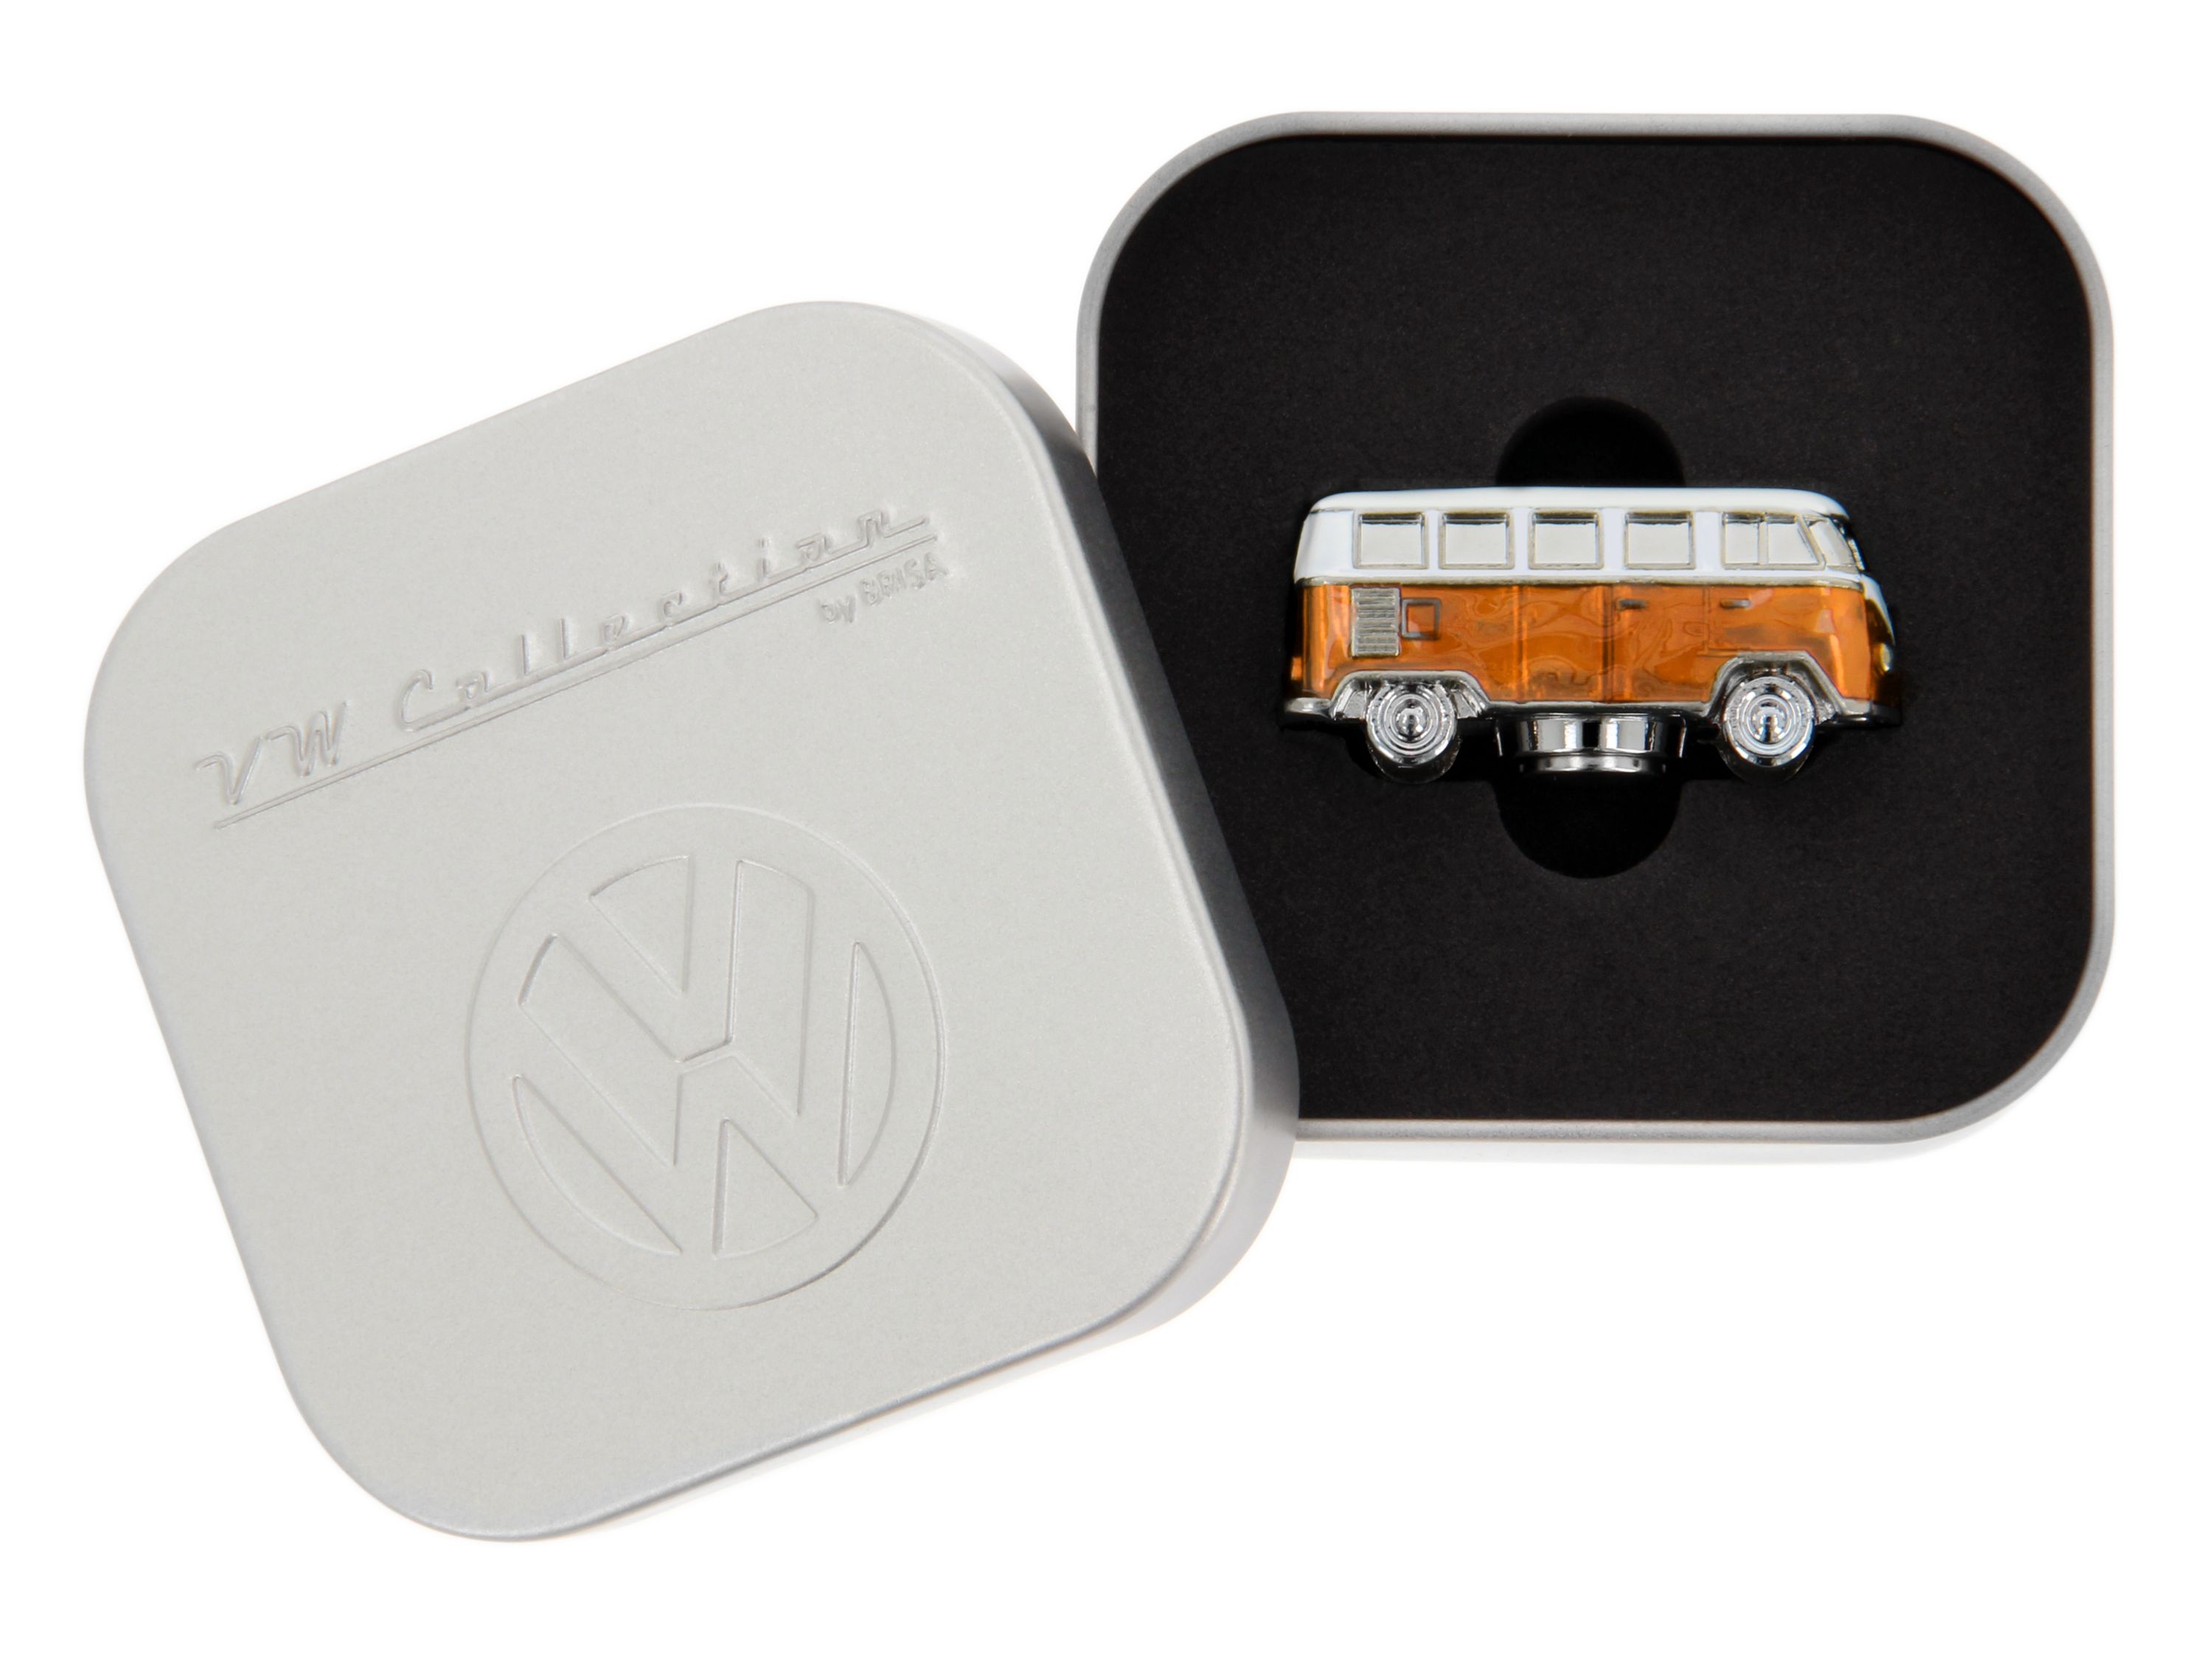 VW T1 Bulli Bus 3D Mini Model with magnet in gift box